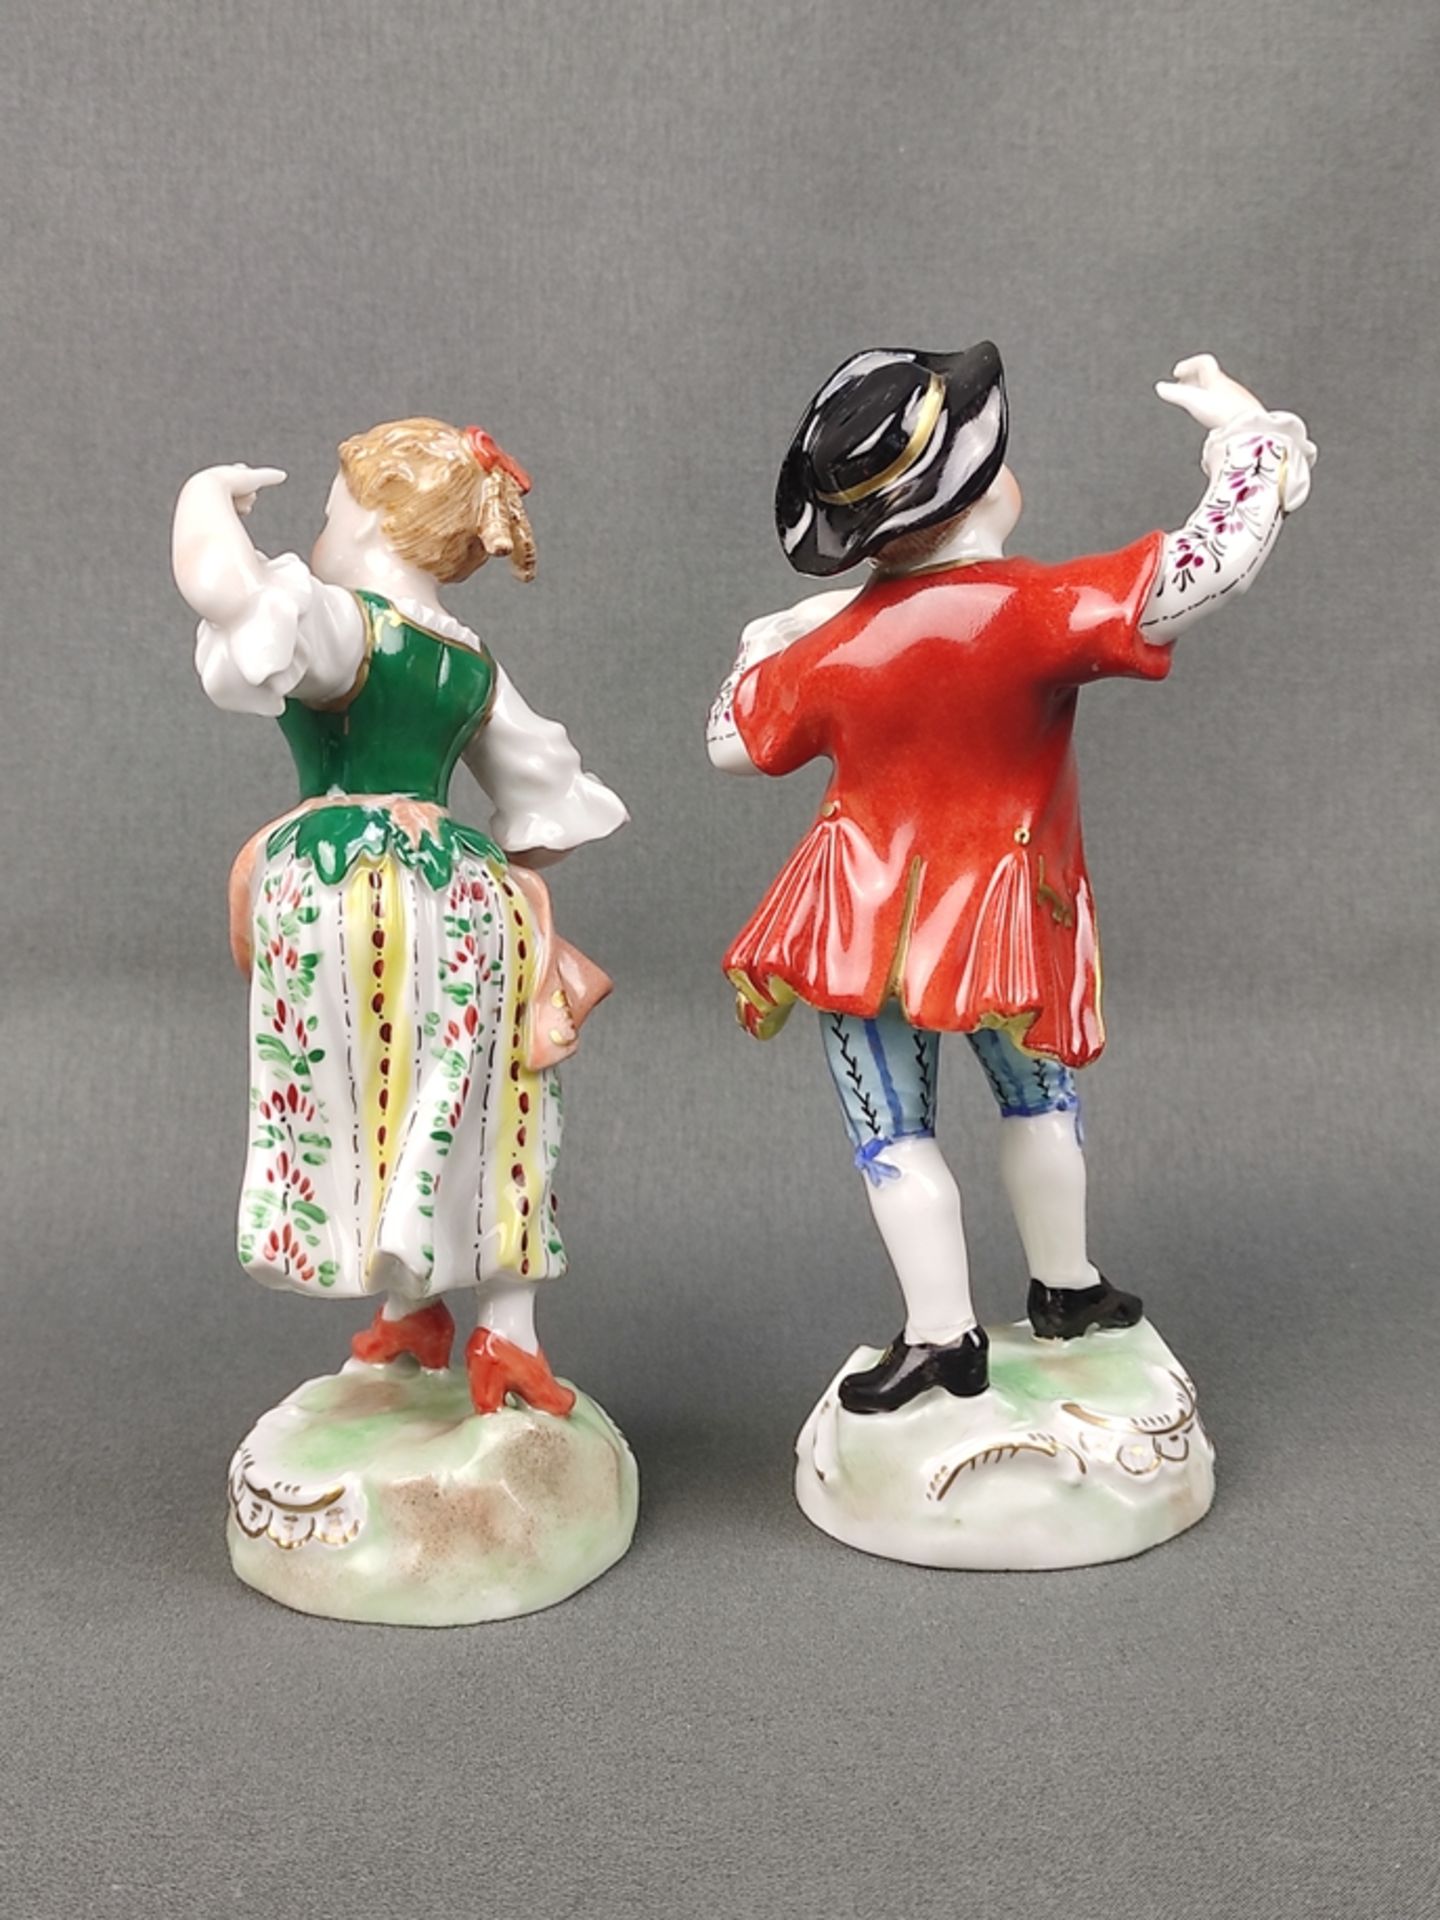 Pair of porcelain figures "Farmer's Dance", Dresden porcelain, woman and man in peasant dress in da - Image 2 of 3